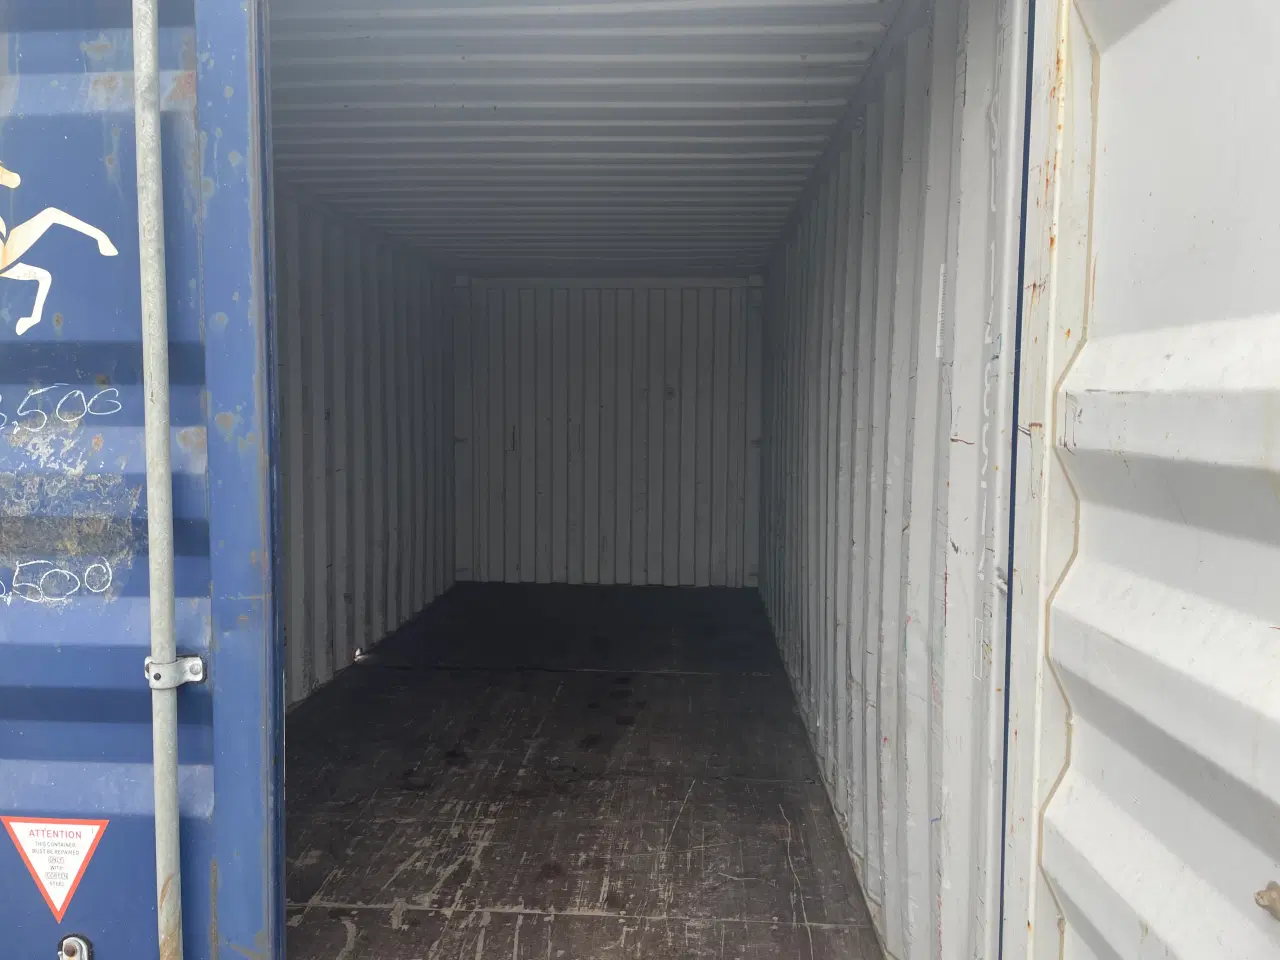 Billede 2 - 20 fods Container - ID: CRSU 148974-1